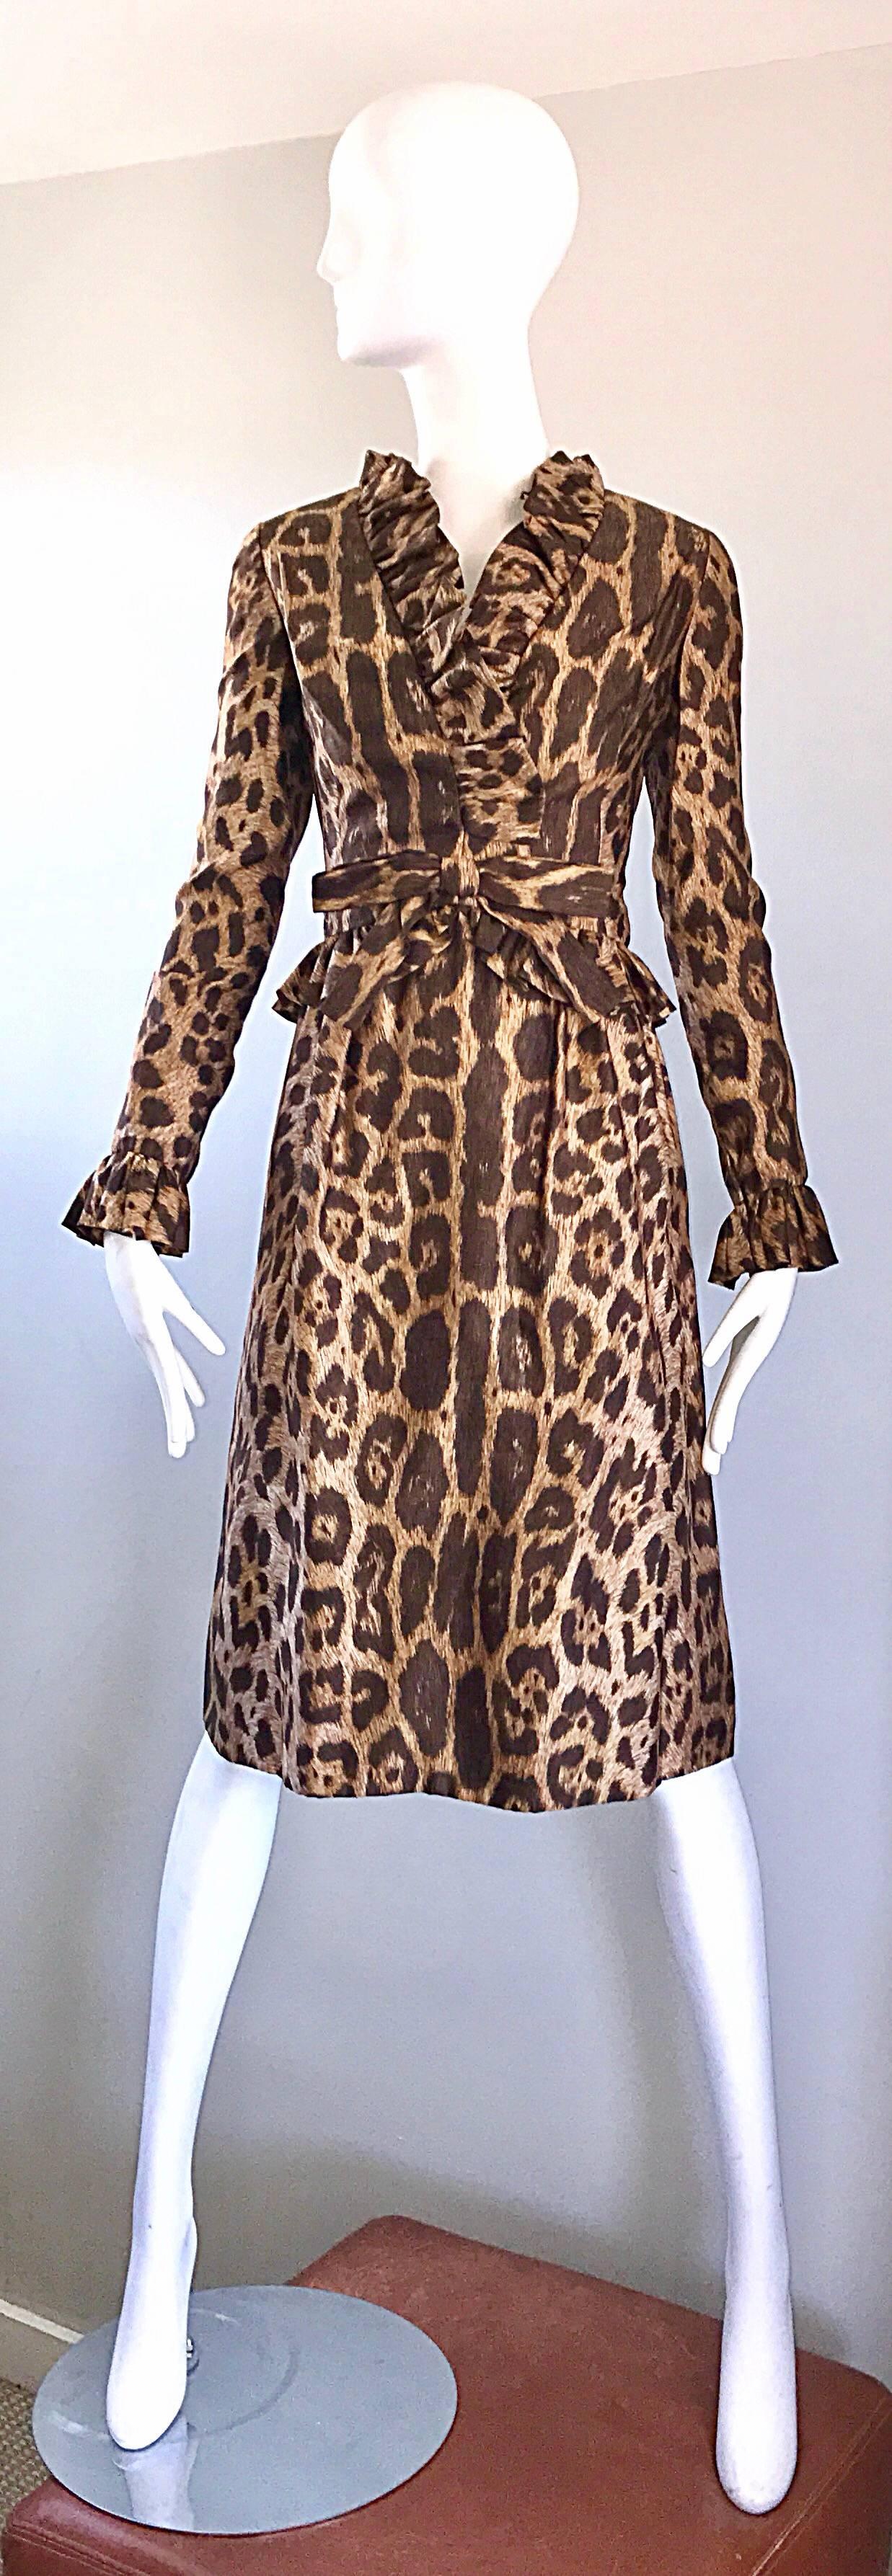 Mollie Parnis 1960s Chic Leopard Cheetah Print Silk Vintage 60s A Line Dress  5